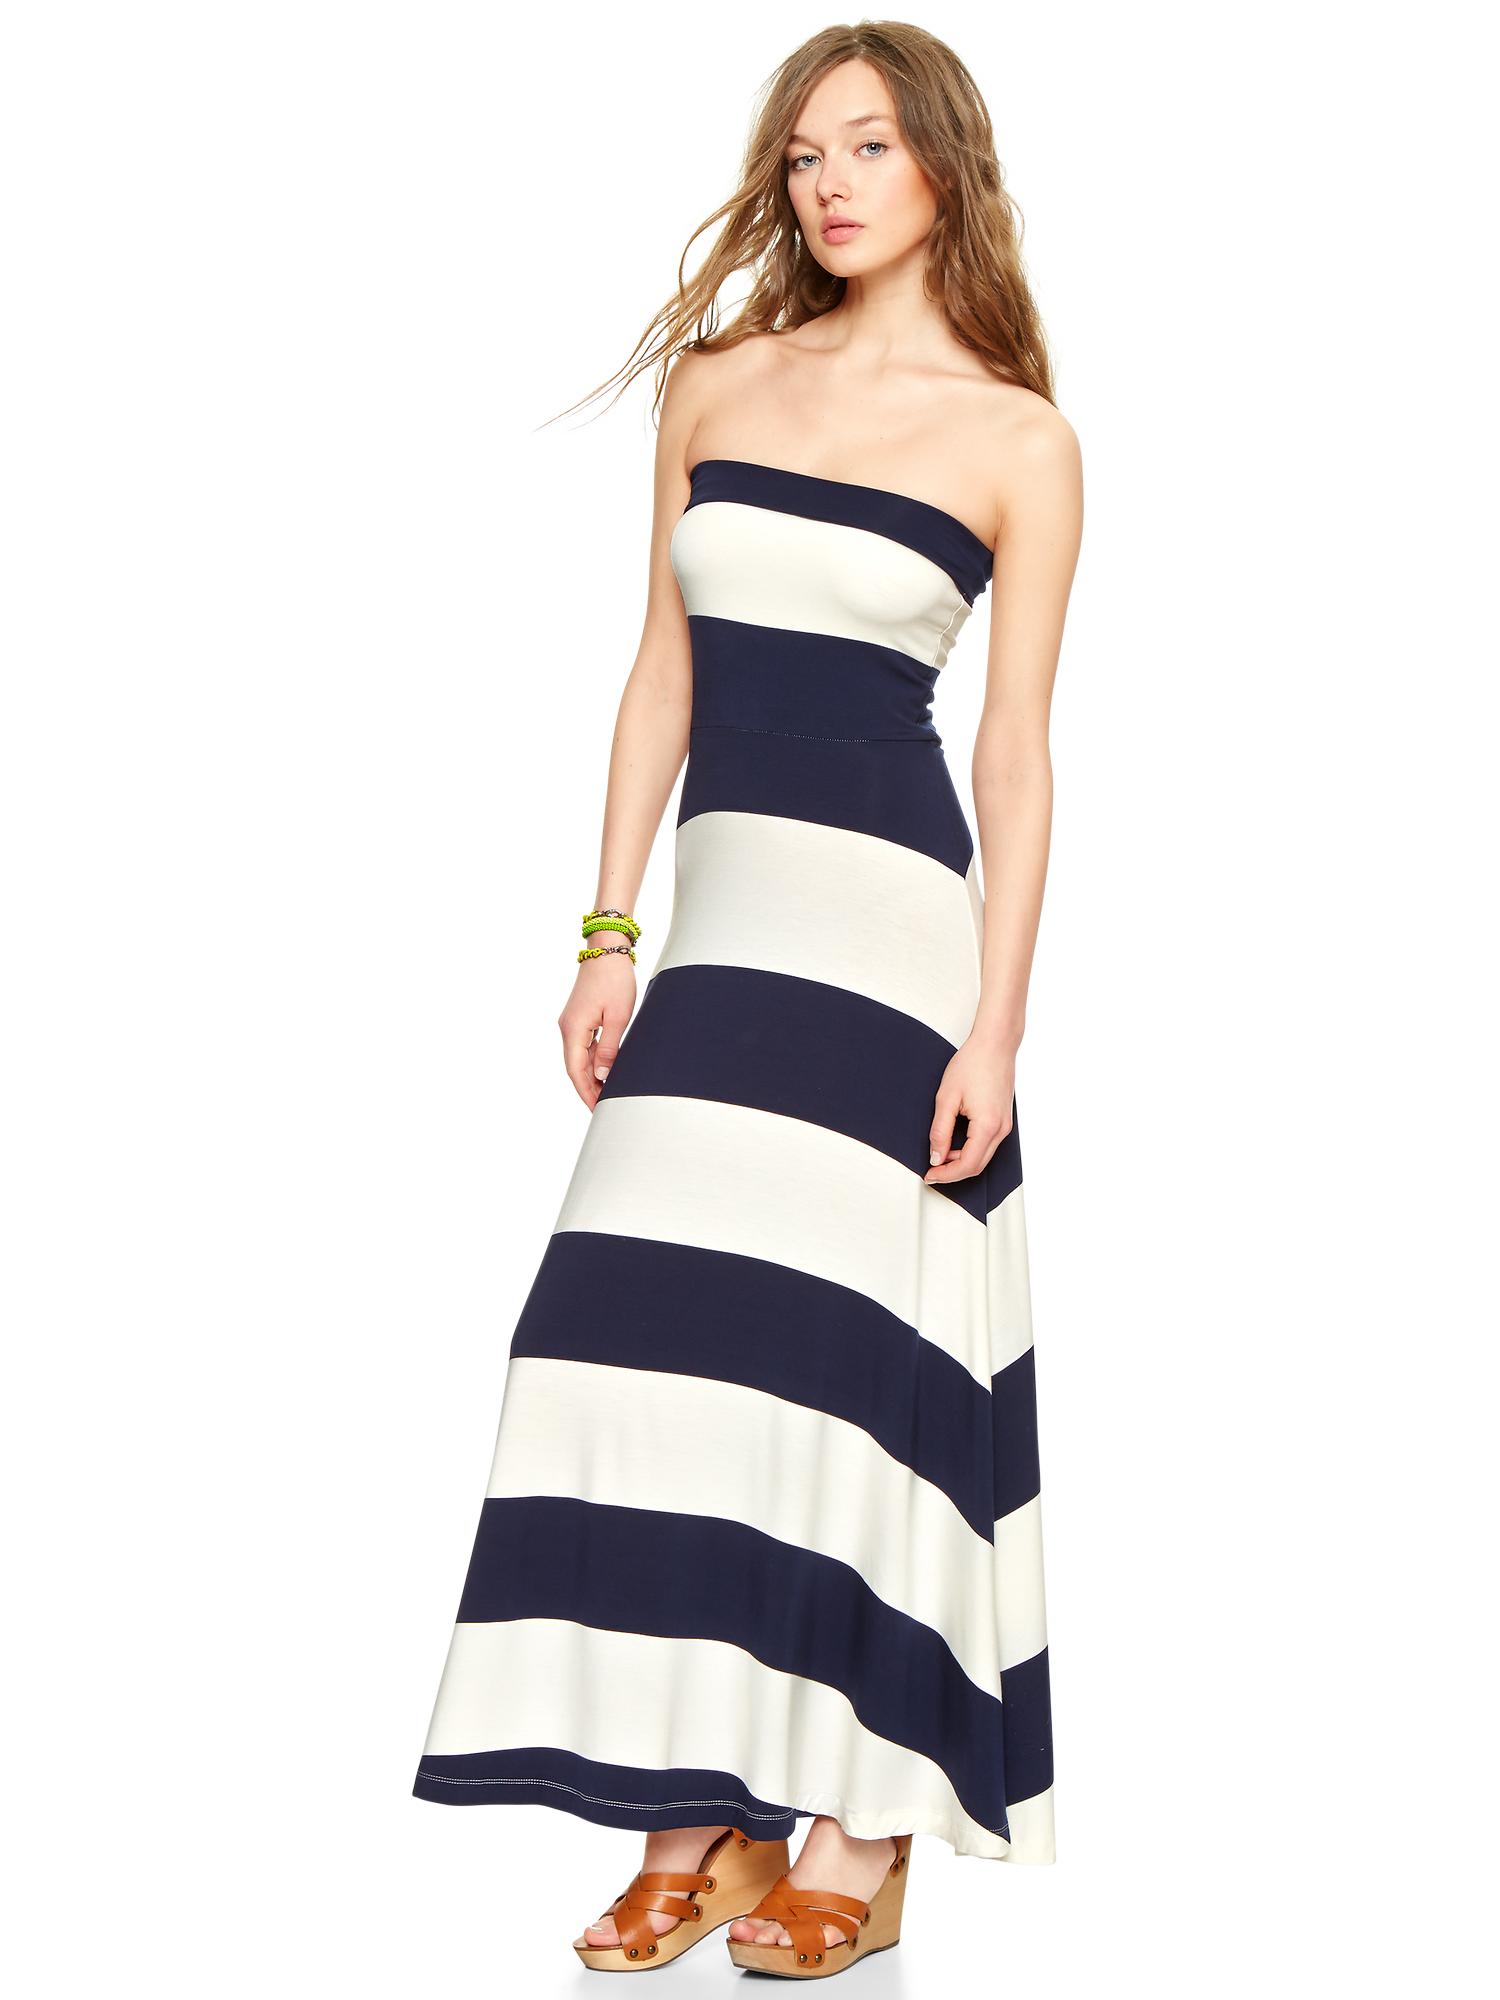 Striped 4-in-1 dress | Gap